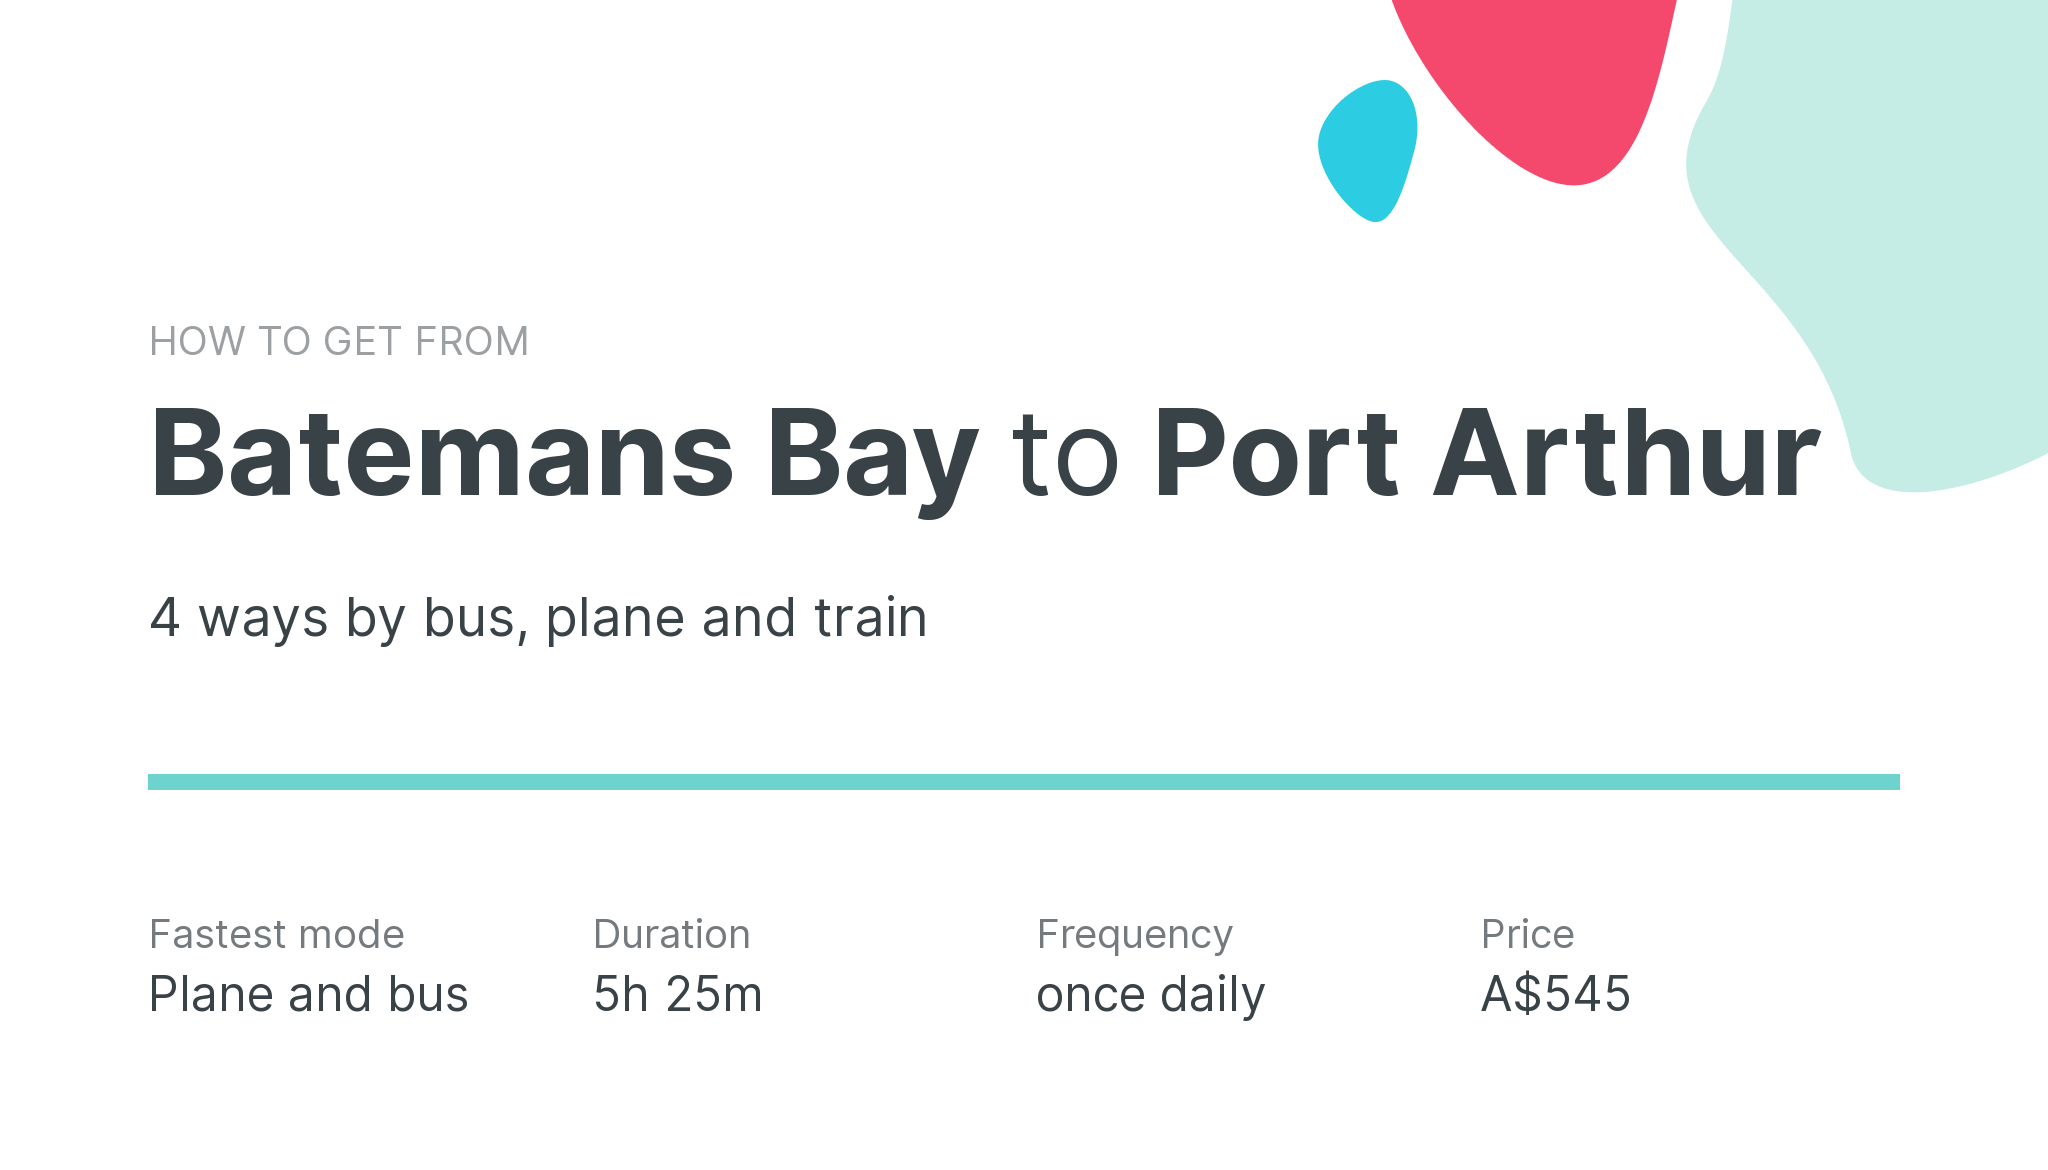 How do I get from Batemans Bay to Port Arthur